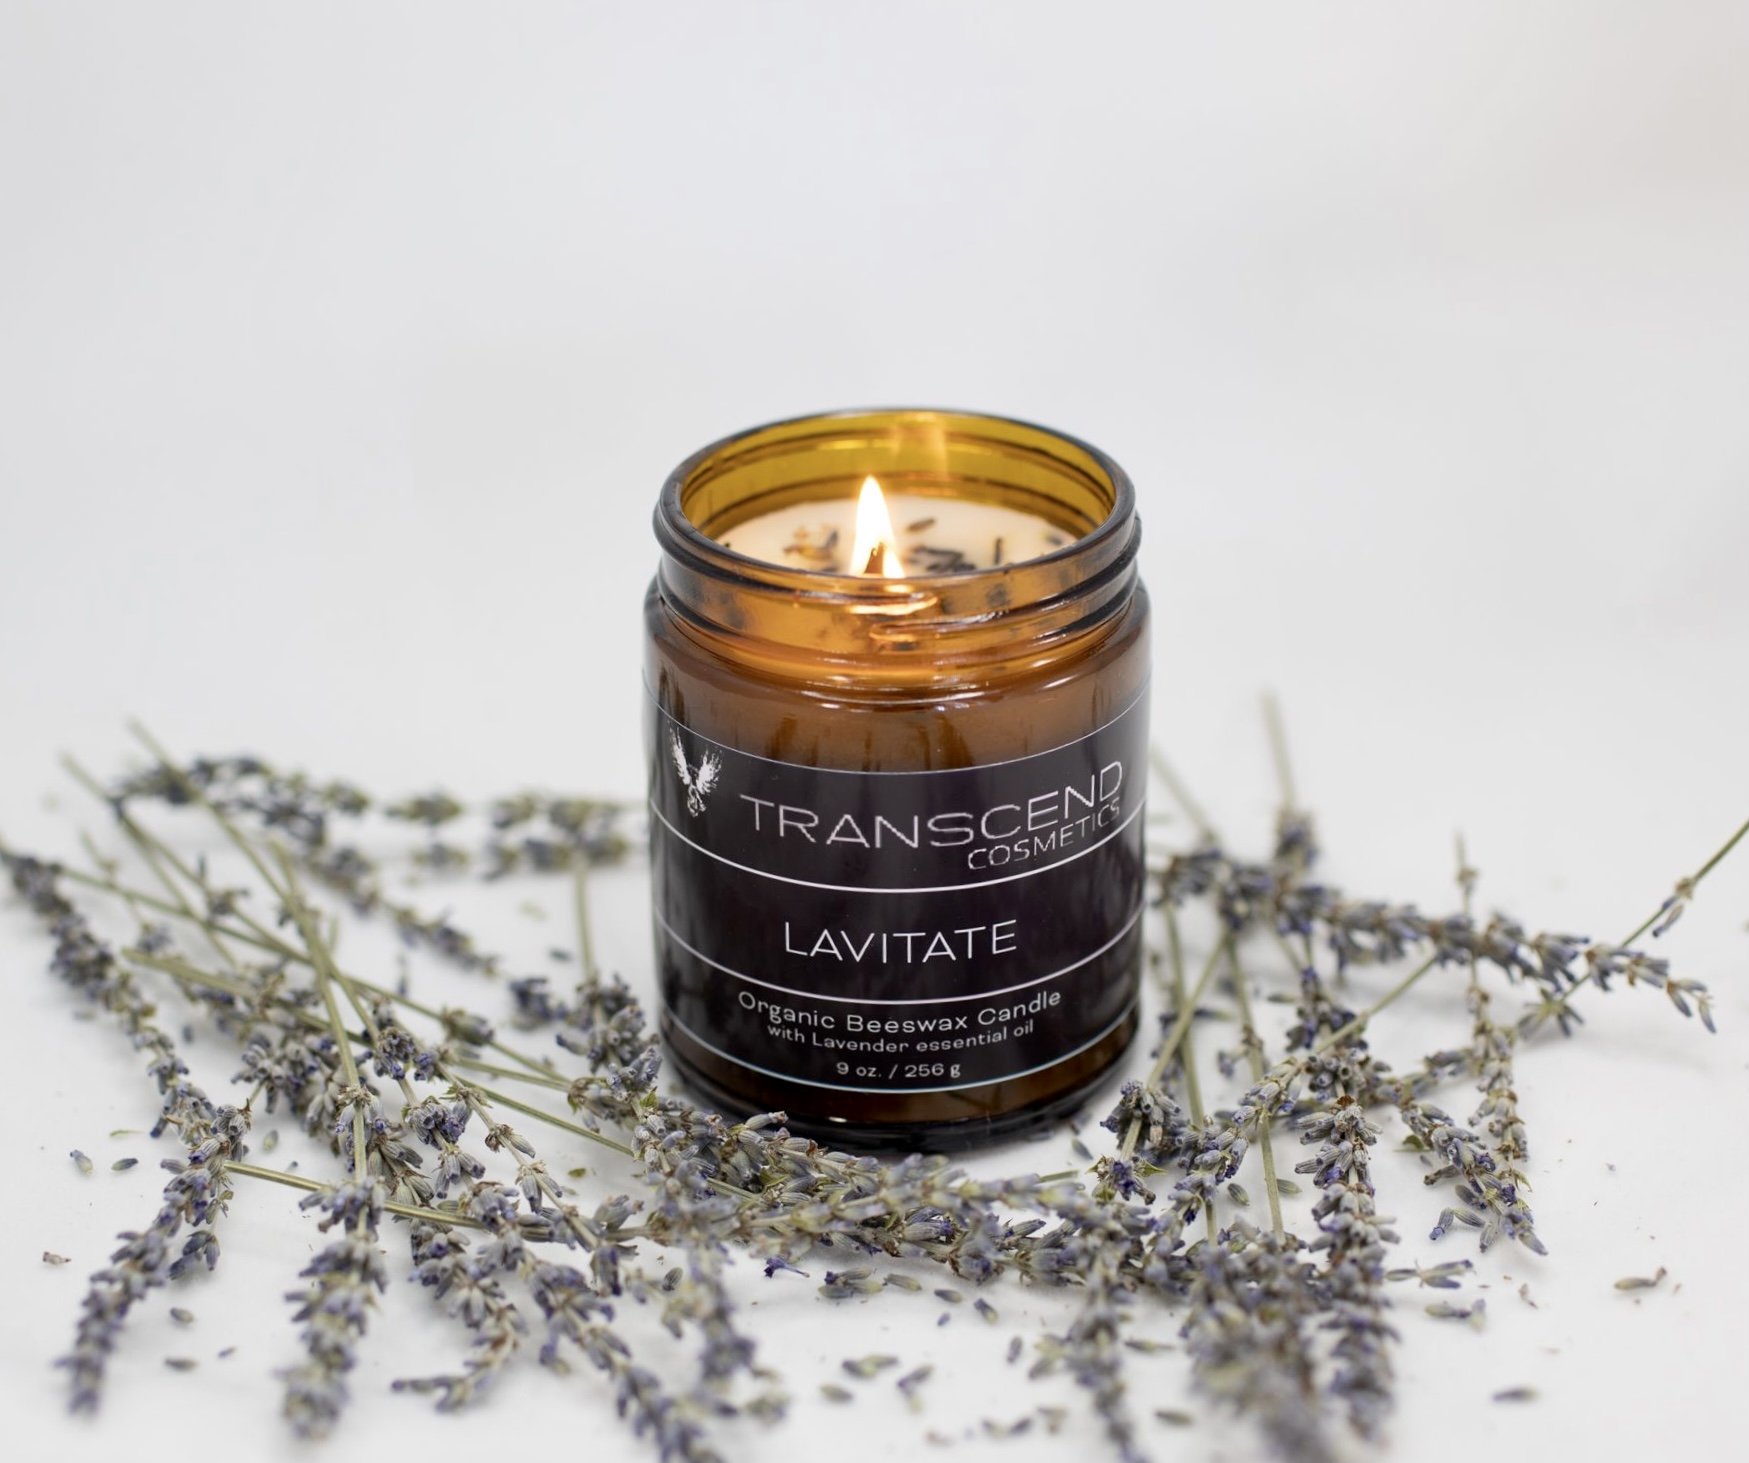 Lavitate Candle : Transcend Cosmetics Candle.jpg